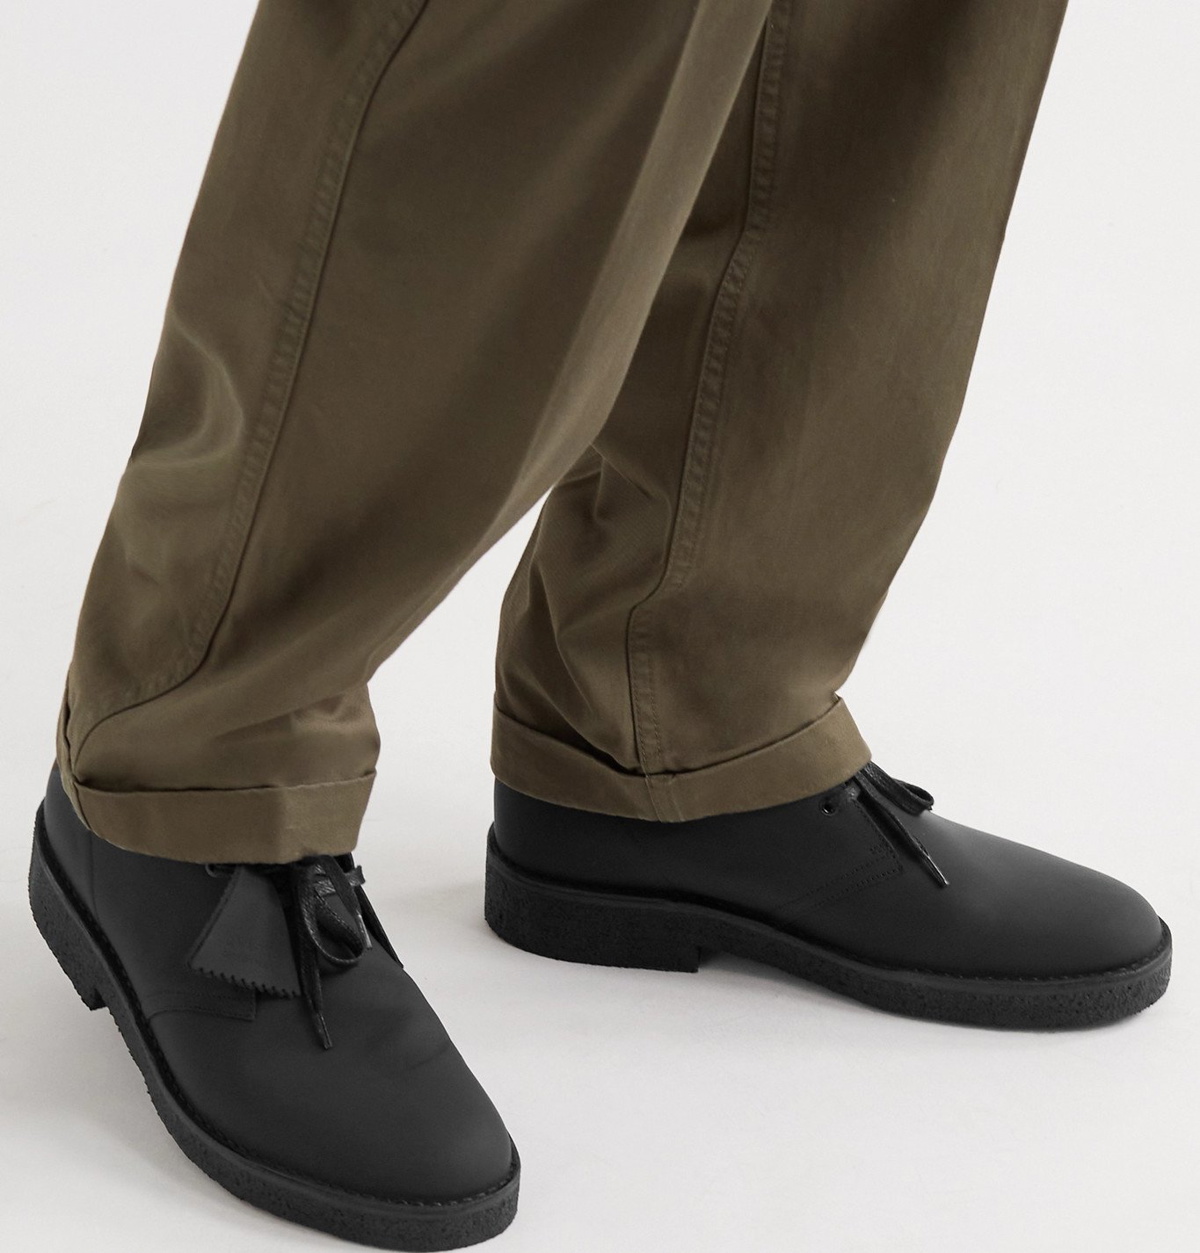 shuttle grinende Guggenheim Museum Clarks Originals - Matte-Leather Desert Boots - Black Clarks Originals